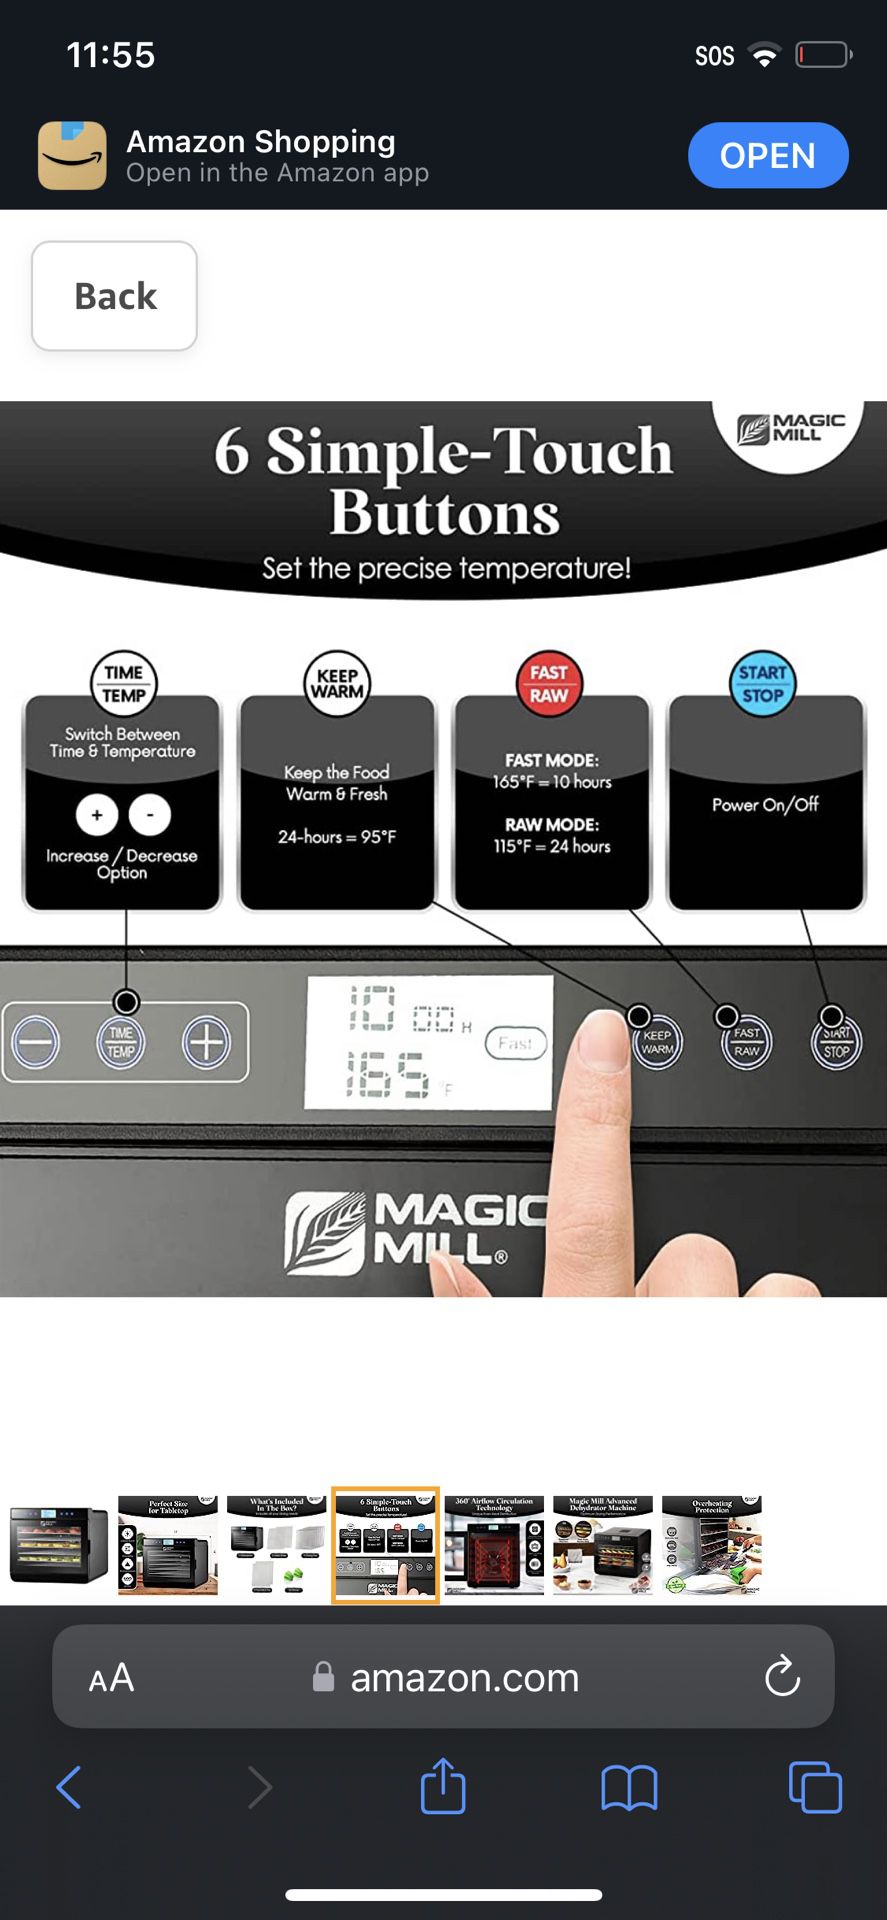 Magic Mill Food Dehydrator Machine, Easy Setup, Digital Adjustable